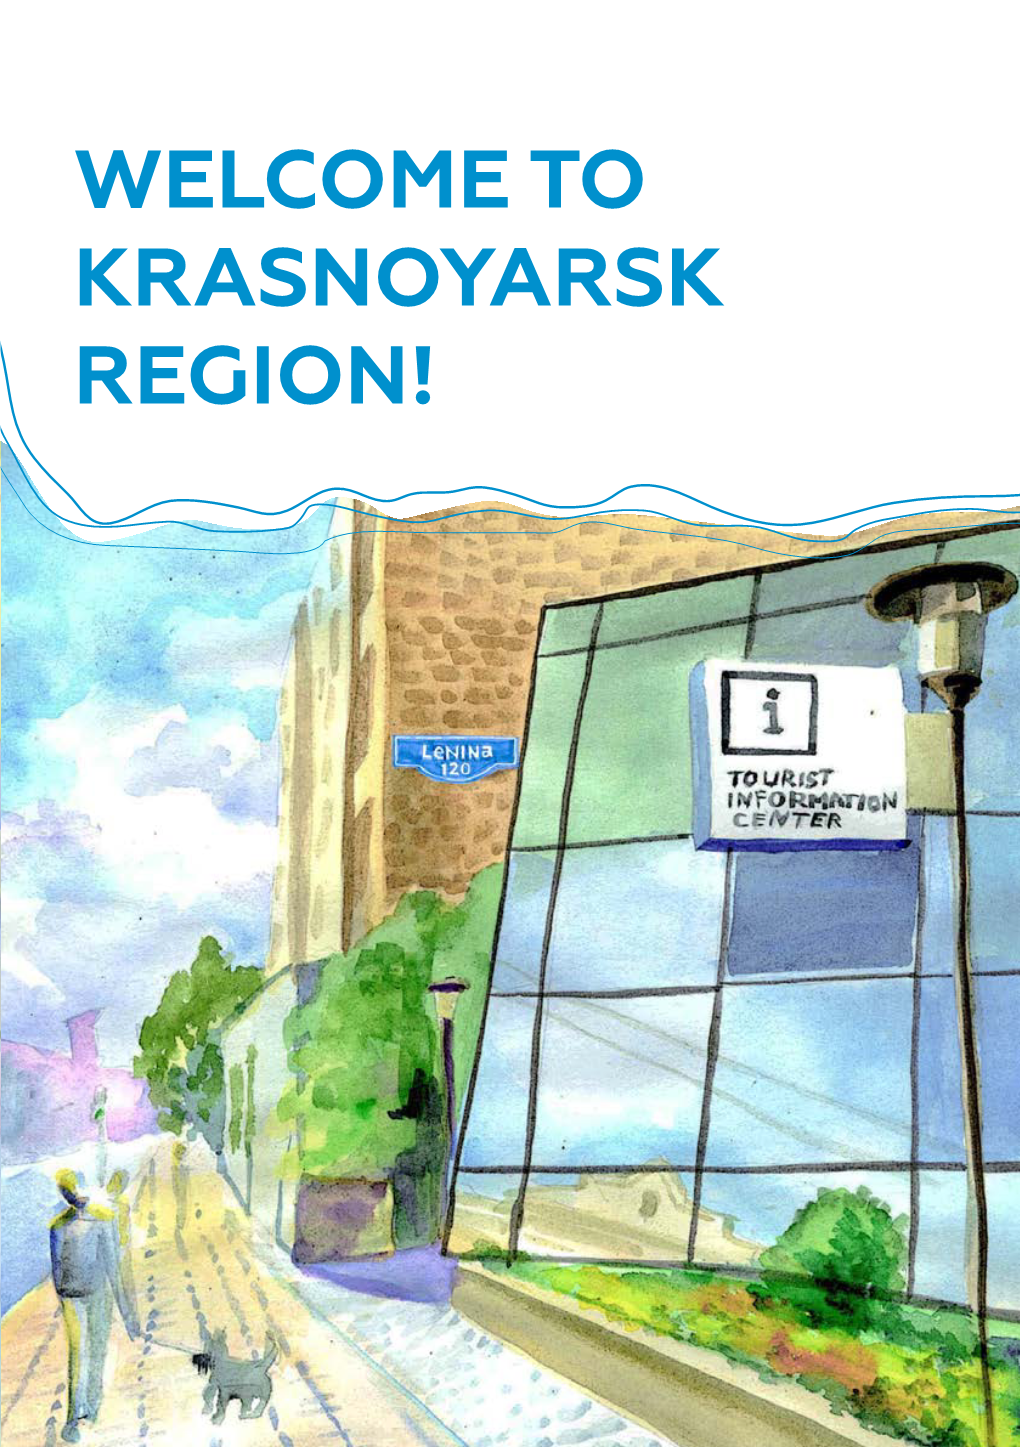 Welcome to Krasnoyarsk Region!